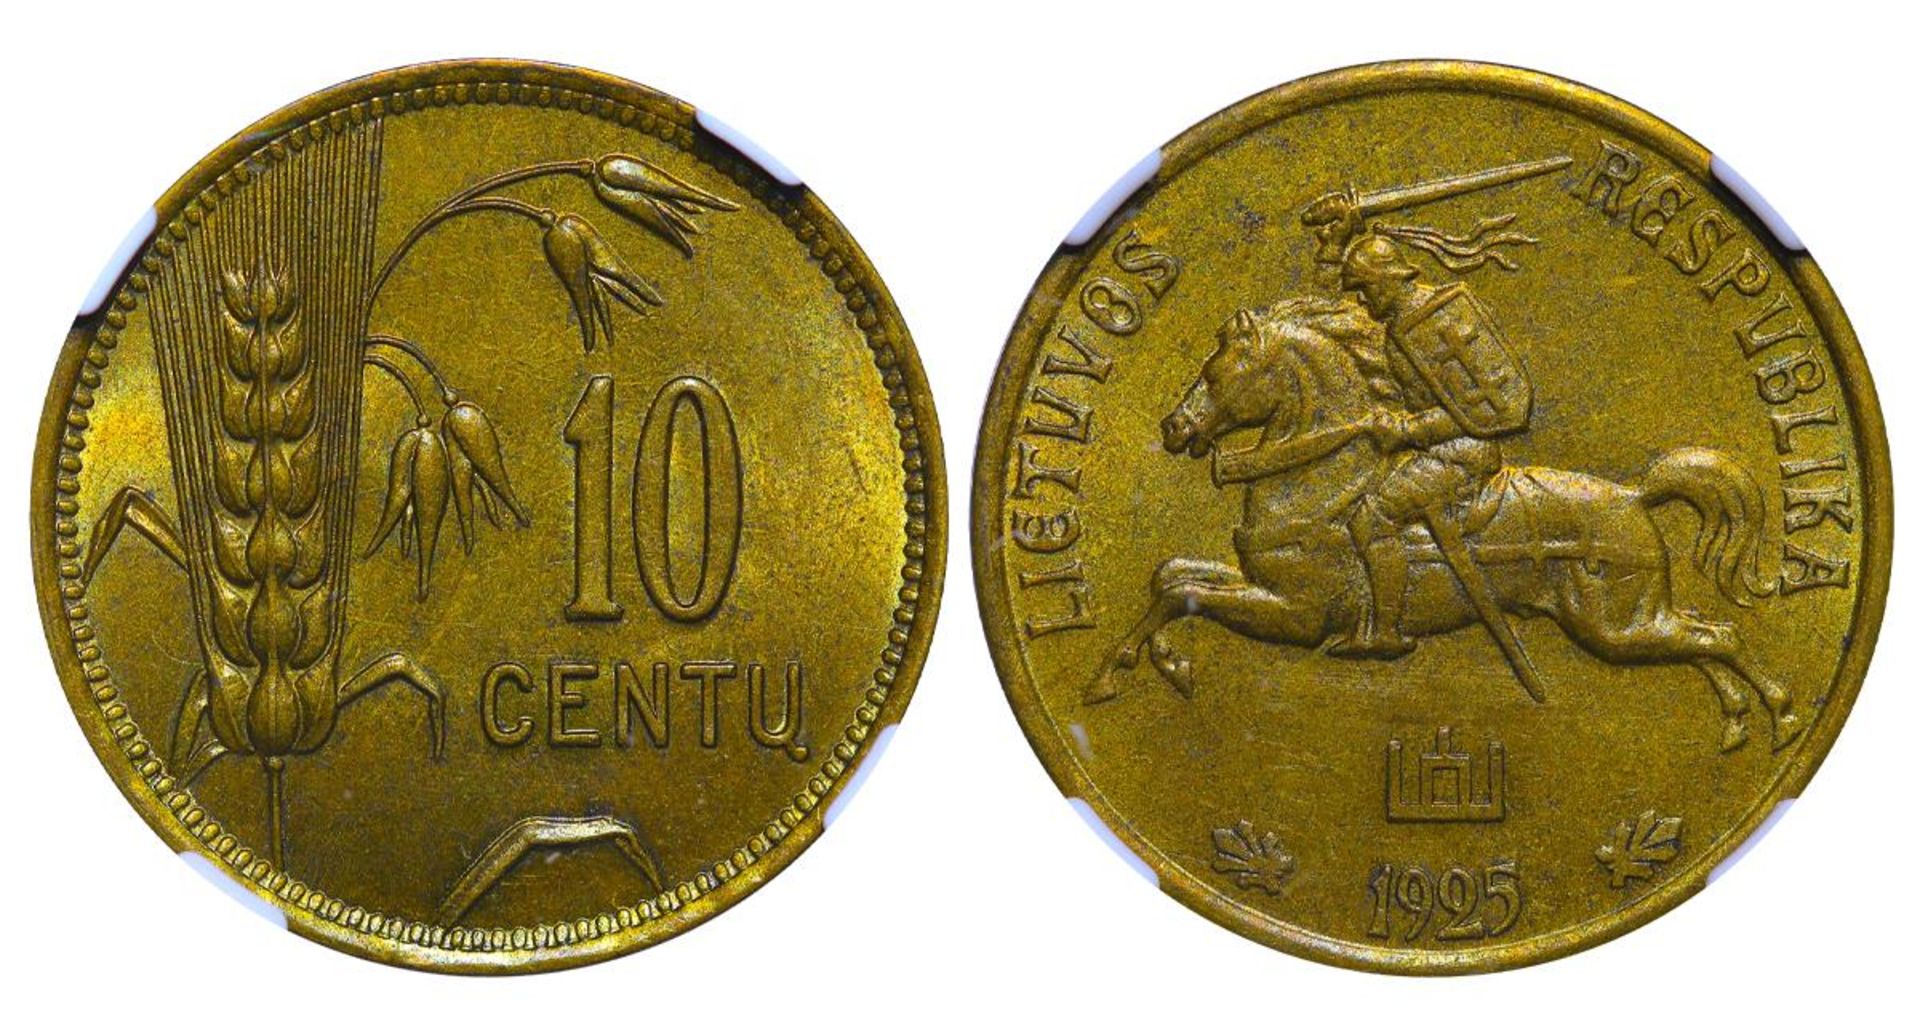 Lithuania, 10 Centu, 1925 year, NGC, MS 64